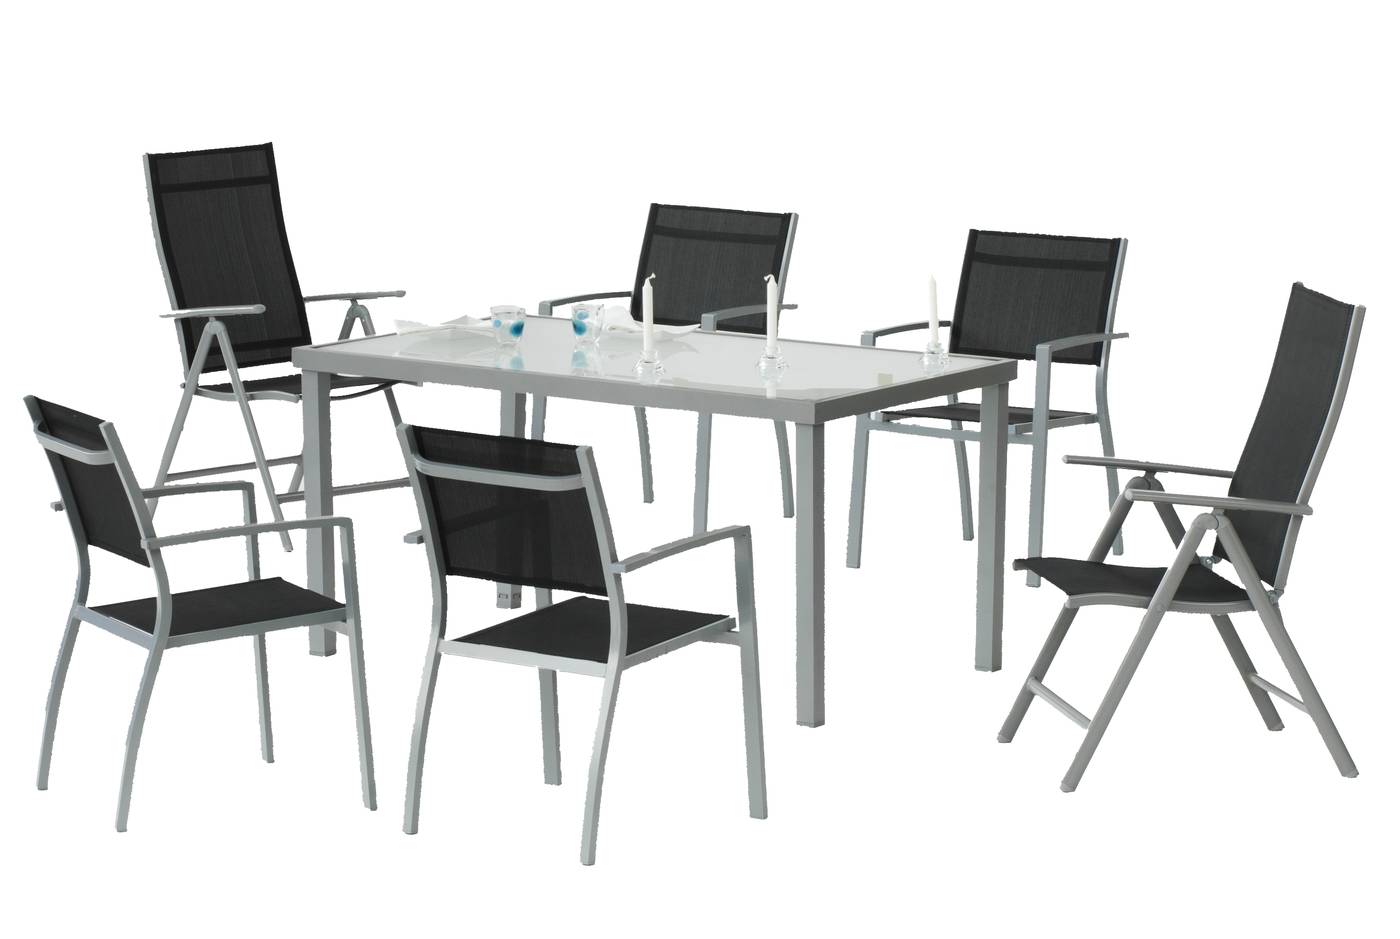 Set Aluminio Perseo-4S2TB - Conjunto aluminio color plata: mesa de 150 cm, 4 sillones apilables y 2 tumbonas